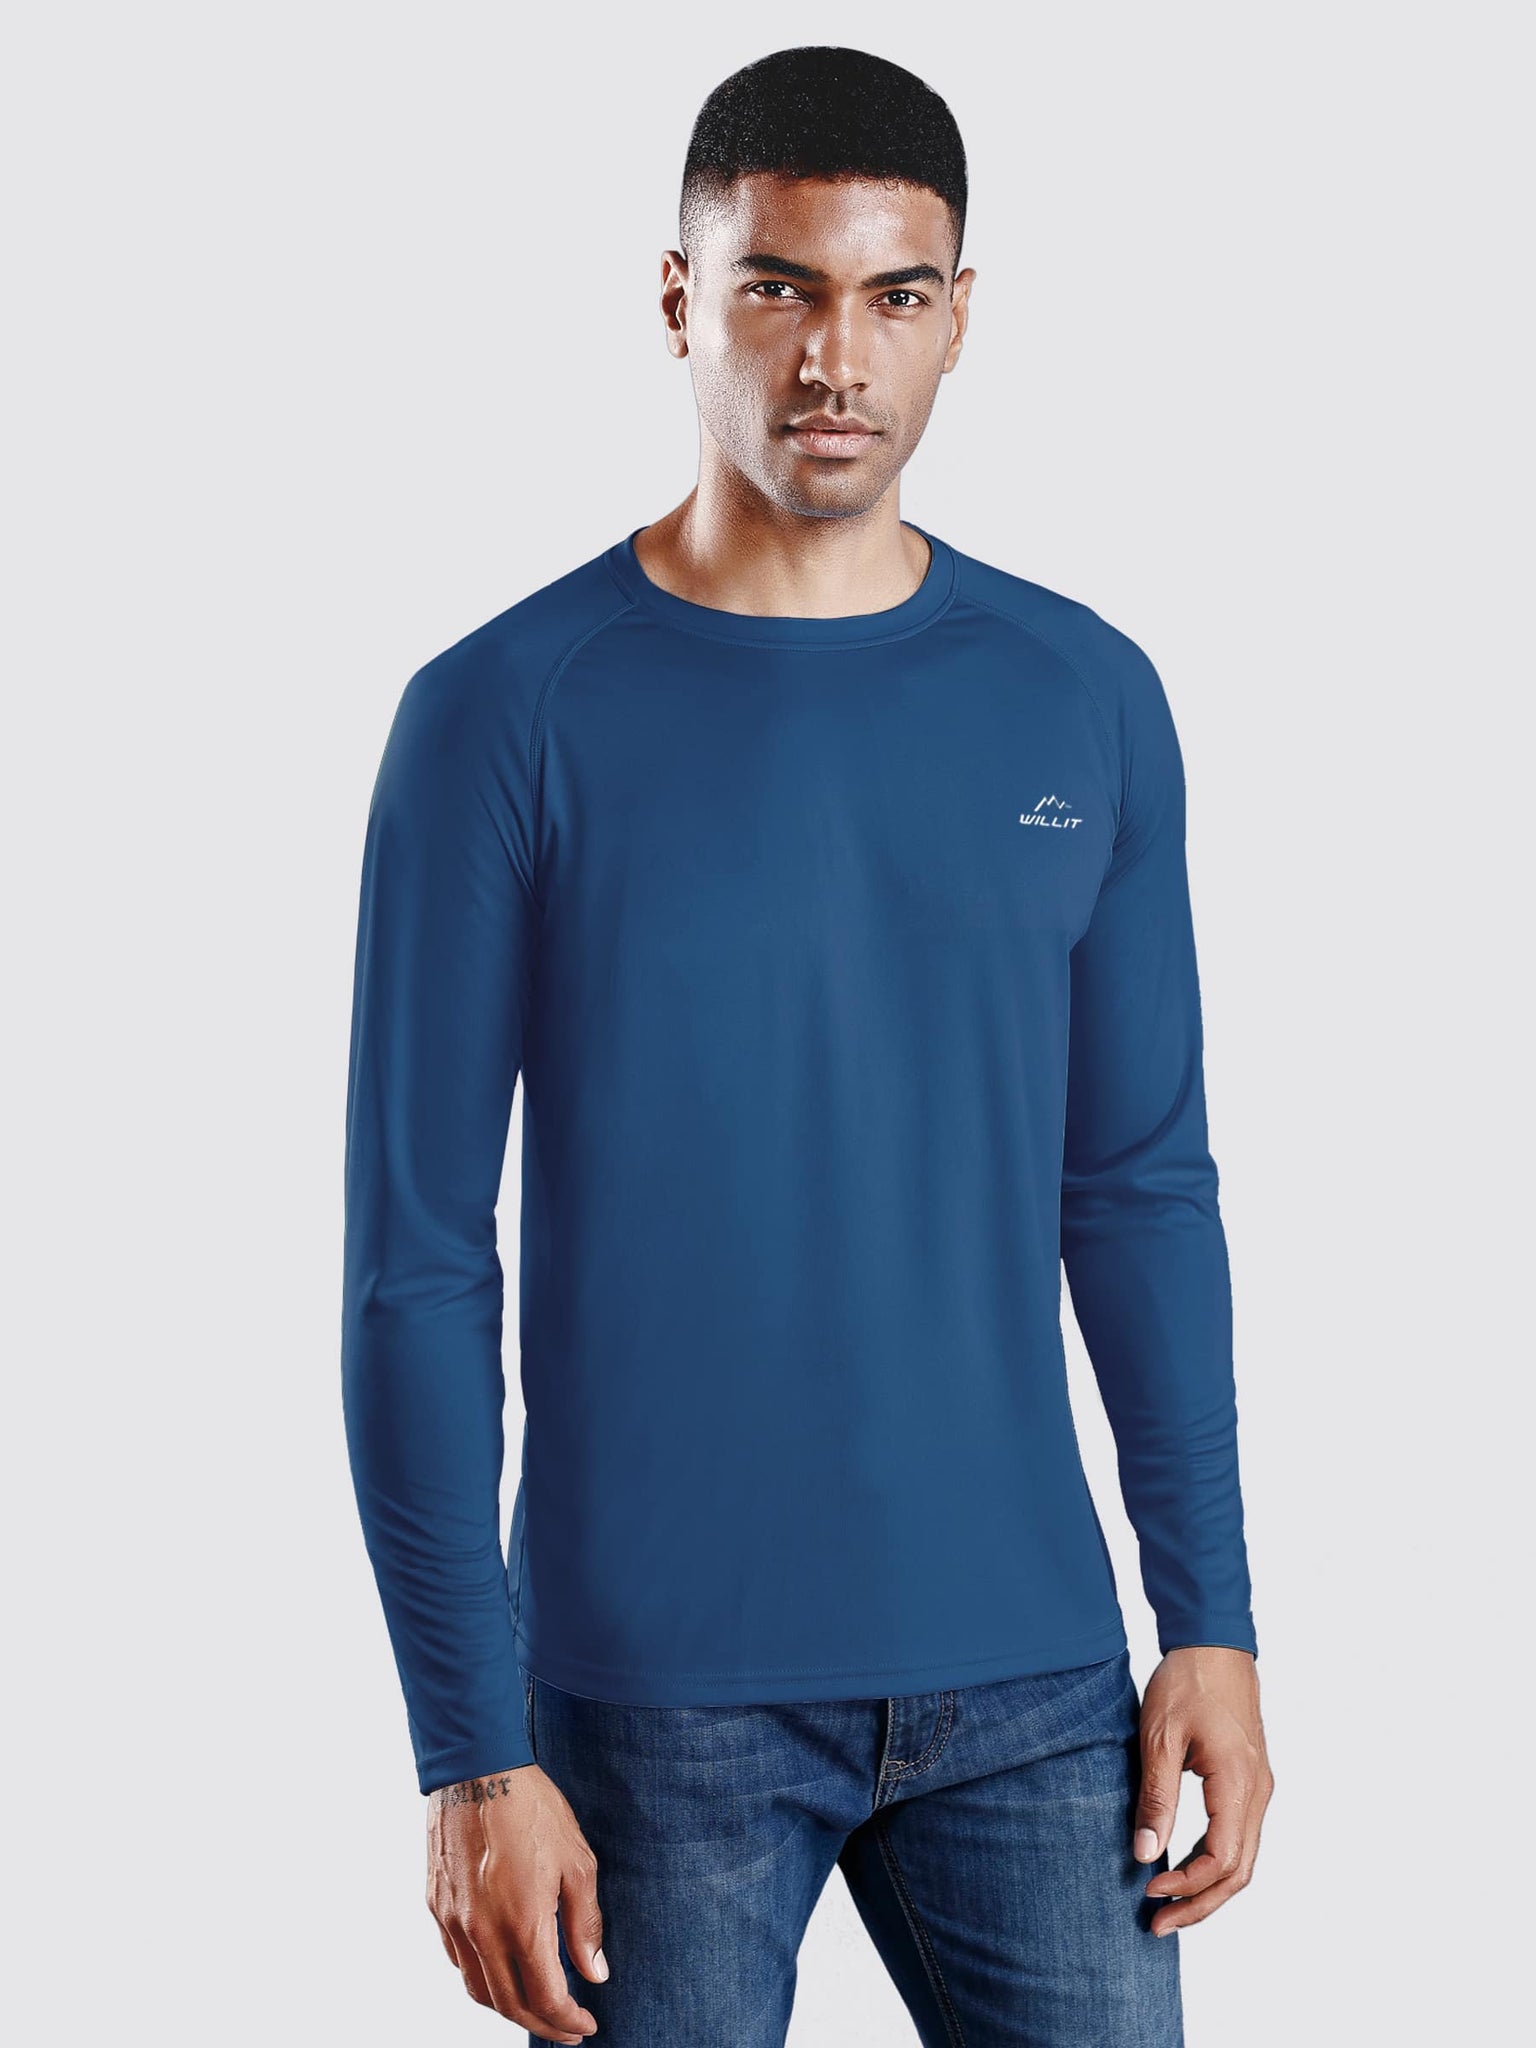 Willit Men's Sun Protection Long Sleeve Shirts_Ocean Blue_model1